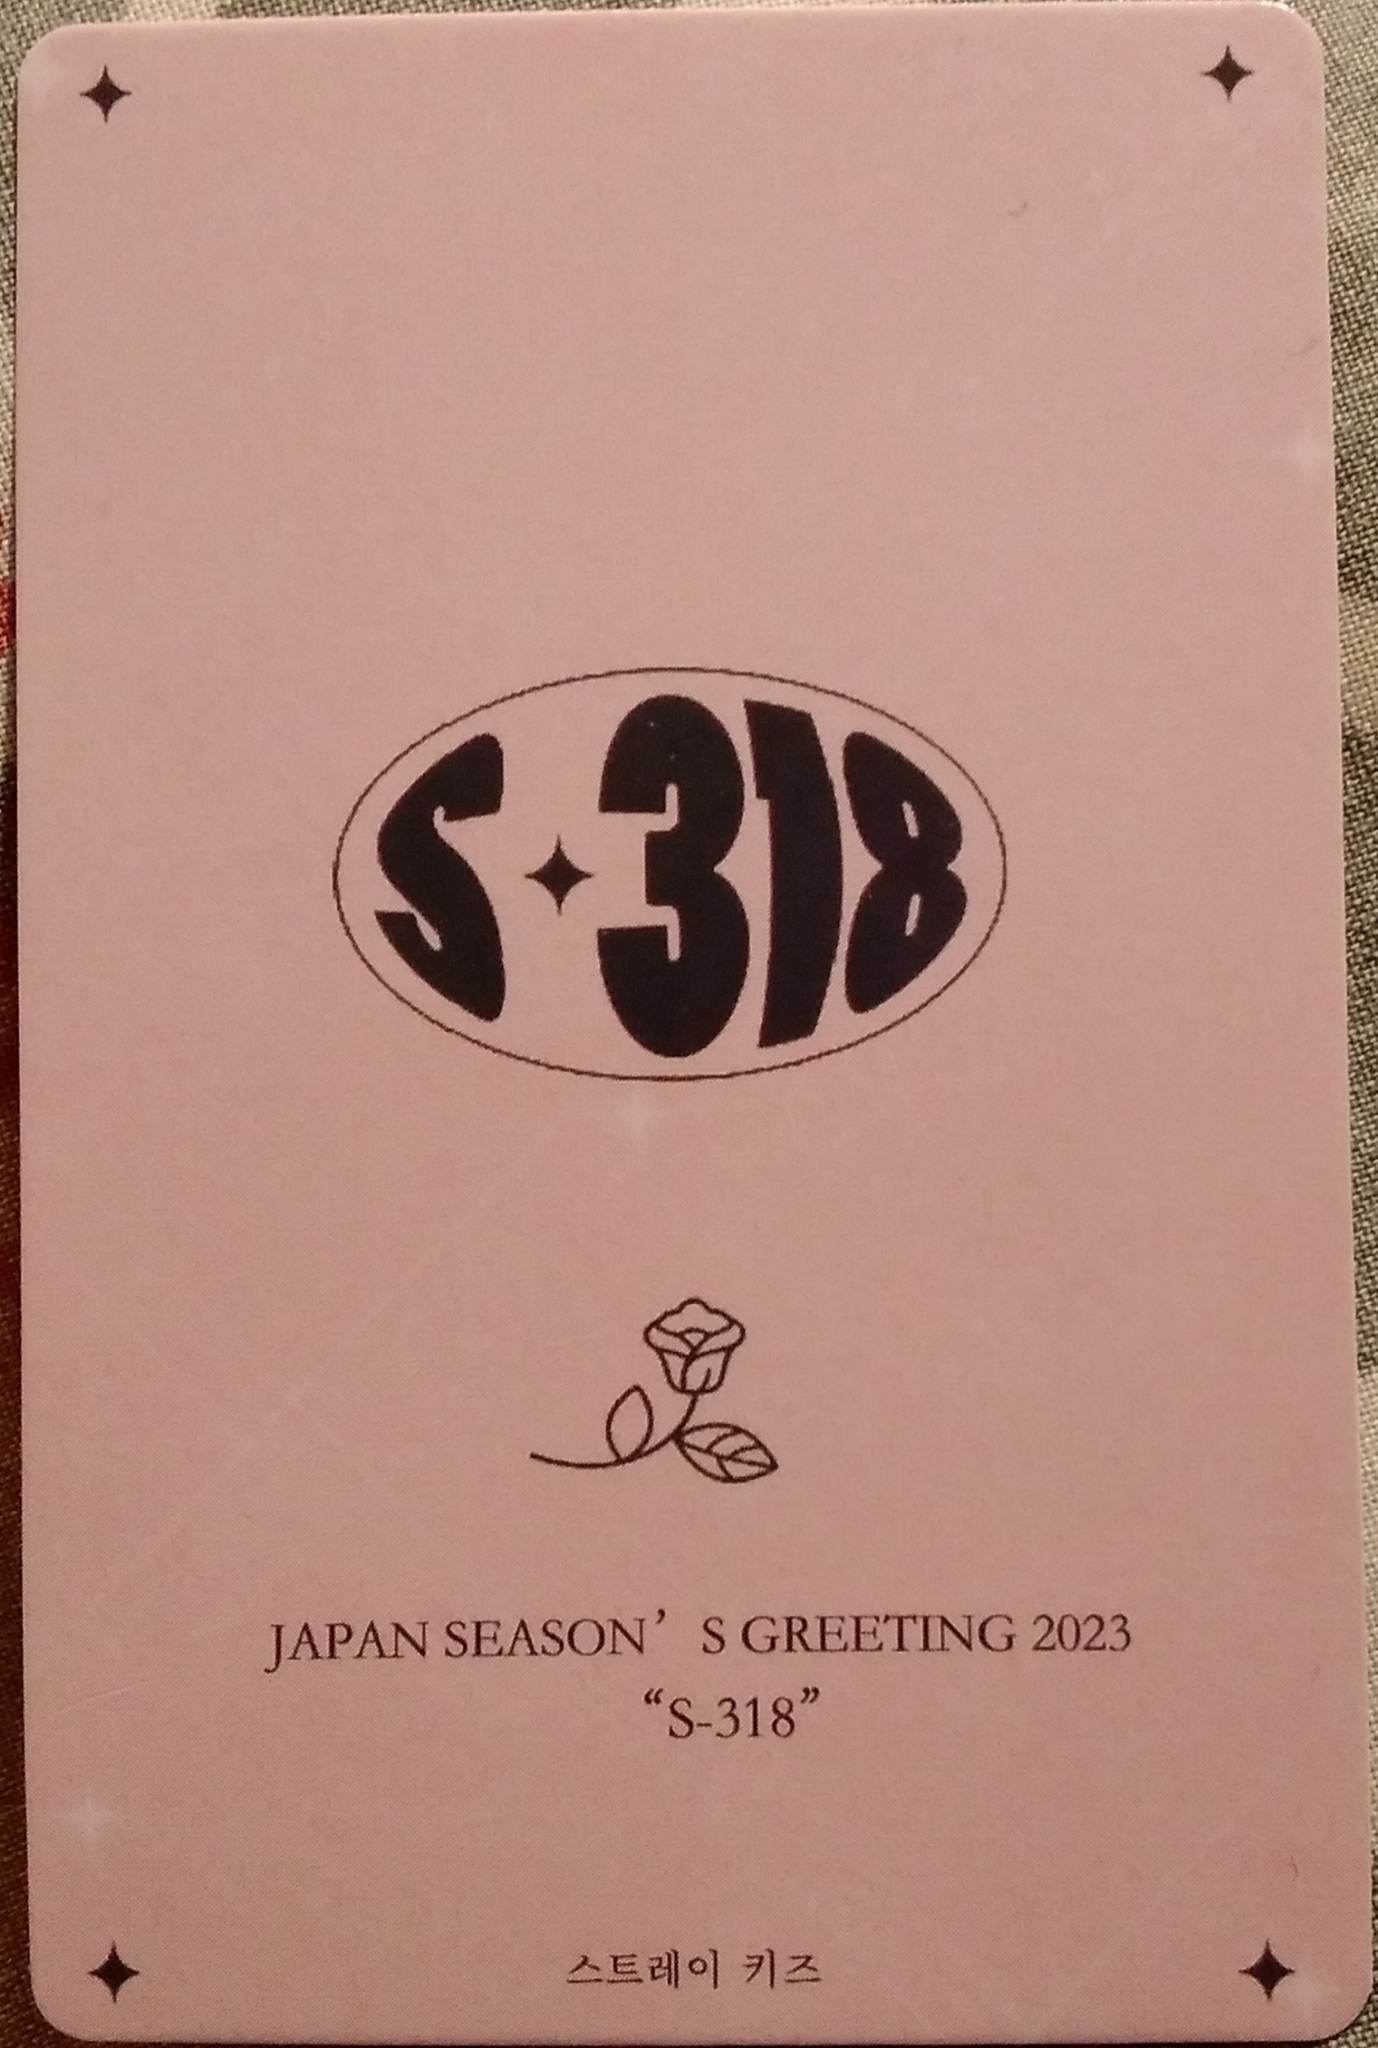 Photocard  STRAYKIDS  Japan season s greetings 2023  "S-318"  Seungmin